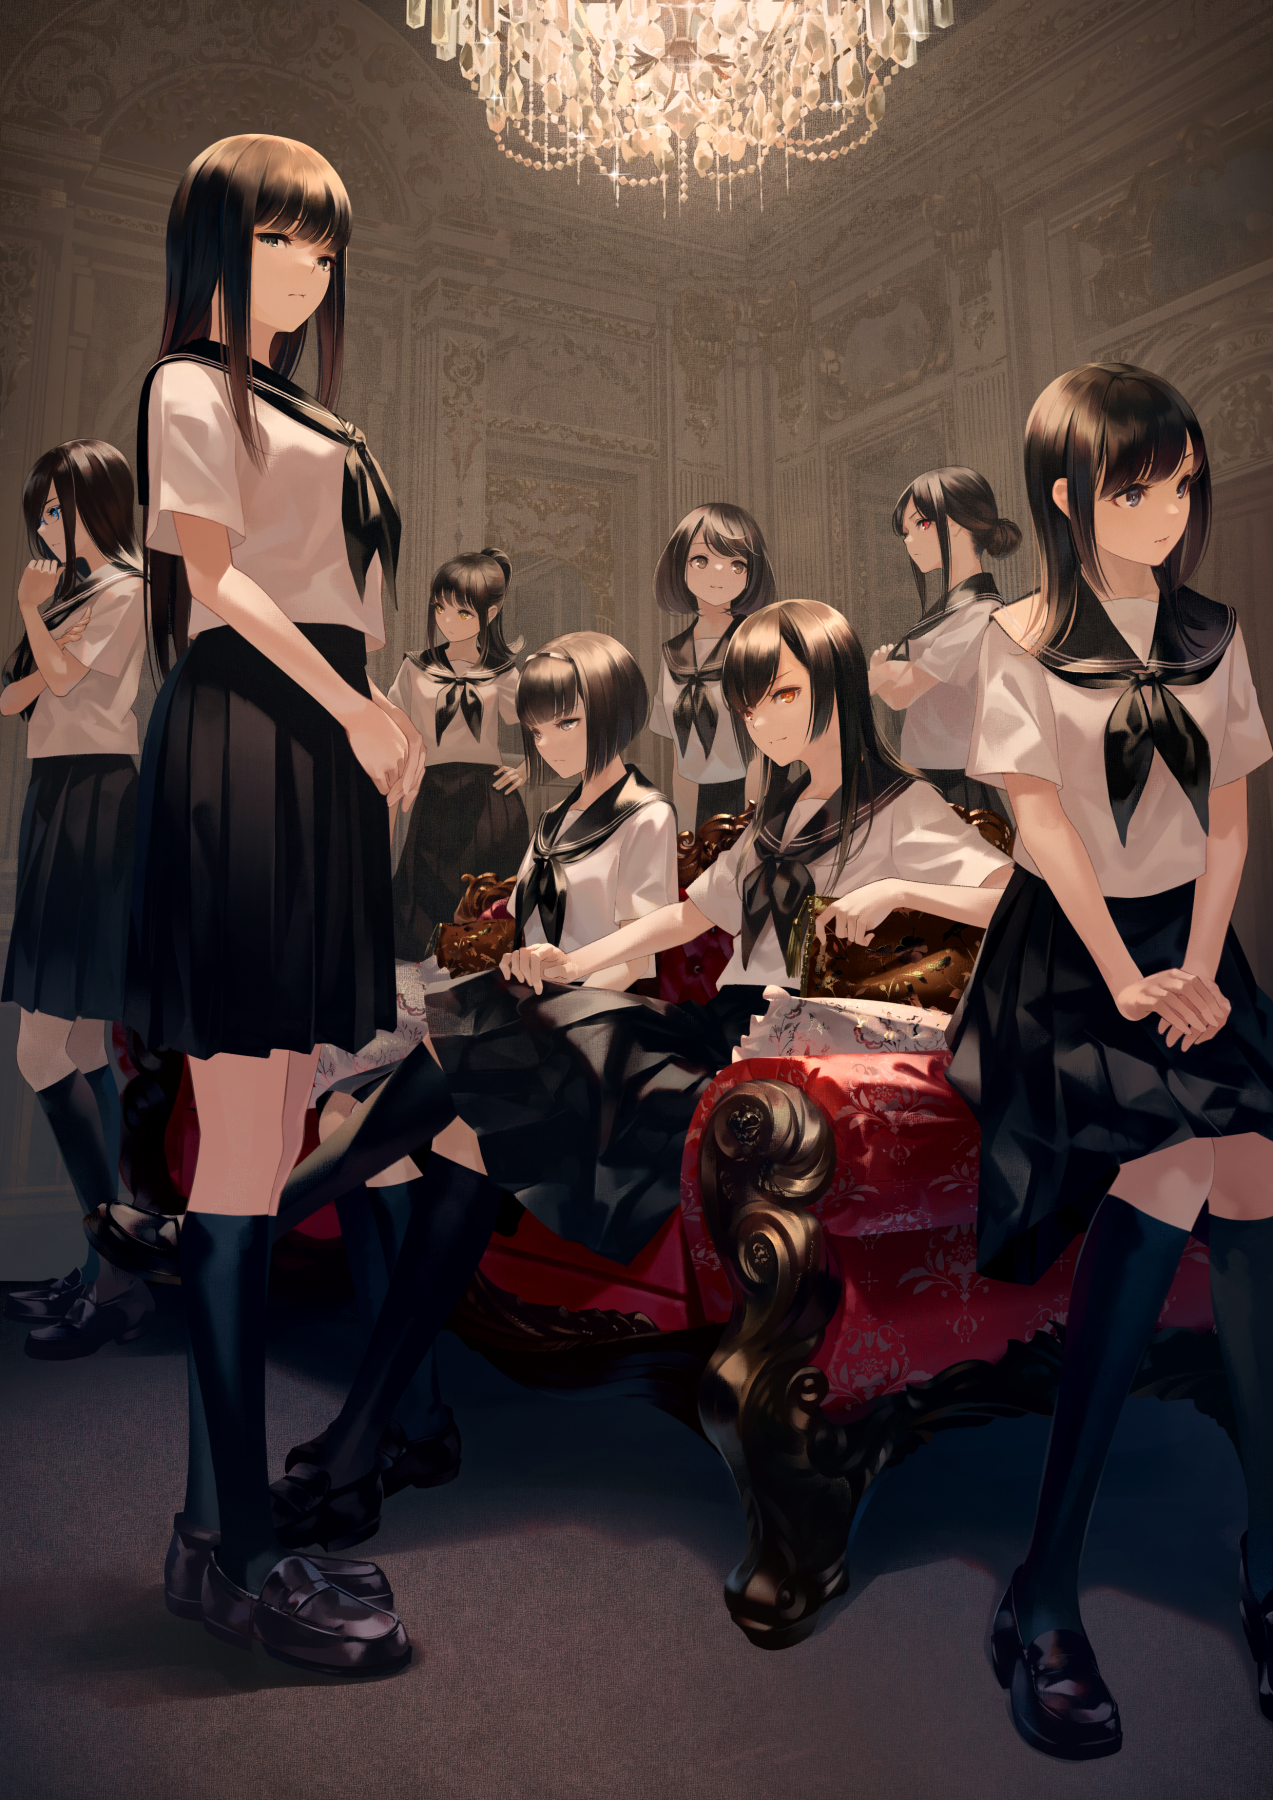 Anime Anime Girls Black Hair School Uniform Skirt Black Skirts Sitting Original Characters Artwork S 1273x1800